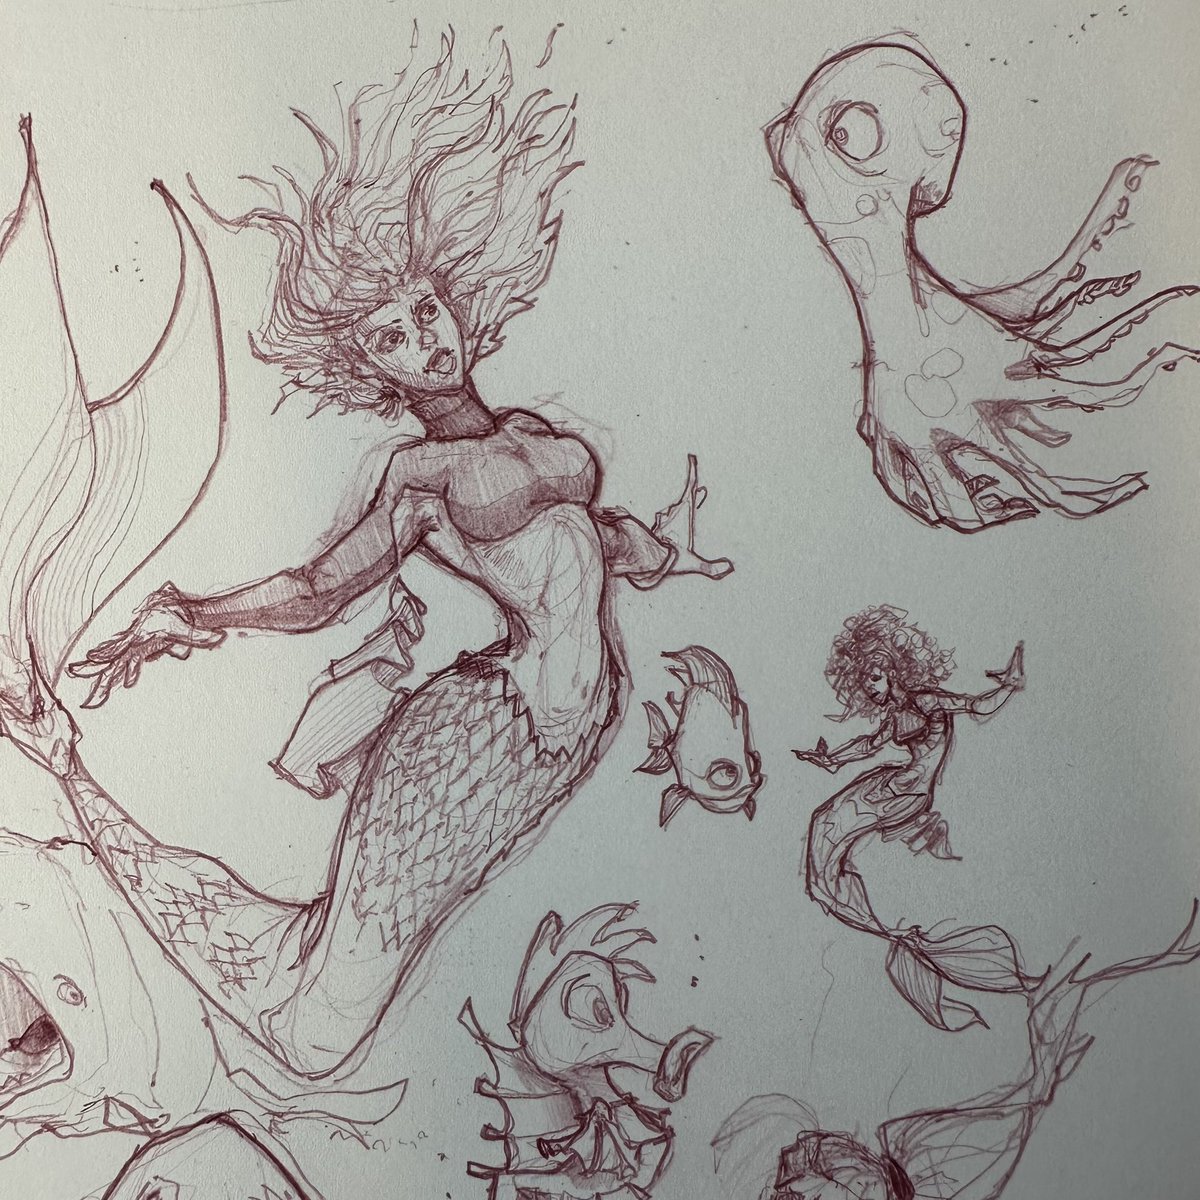 Here’s a #traditional #mermaid #illustration for #mermay 
.
.
.
.
.
#art #drawing #doodlebags #nashville #nashvilleart #characterdesign #nashvilleartist #mermay2023 #underthesea #siren #swimming #pencildrawing #octopus #ocean